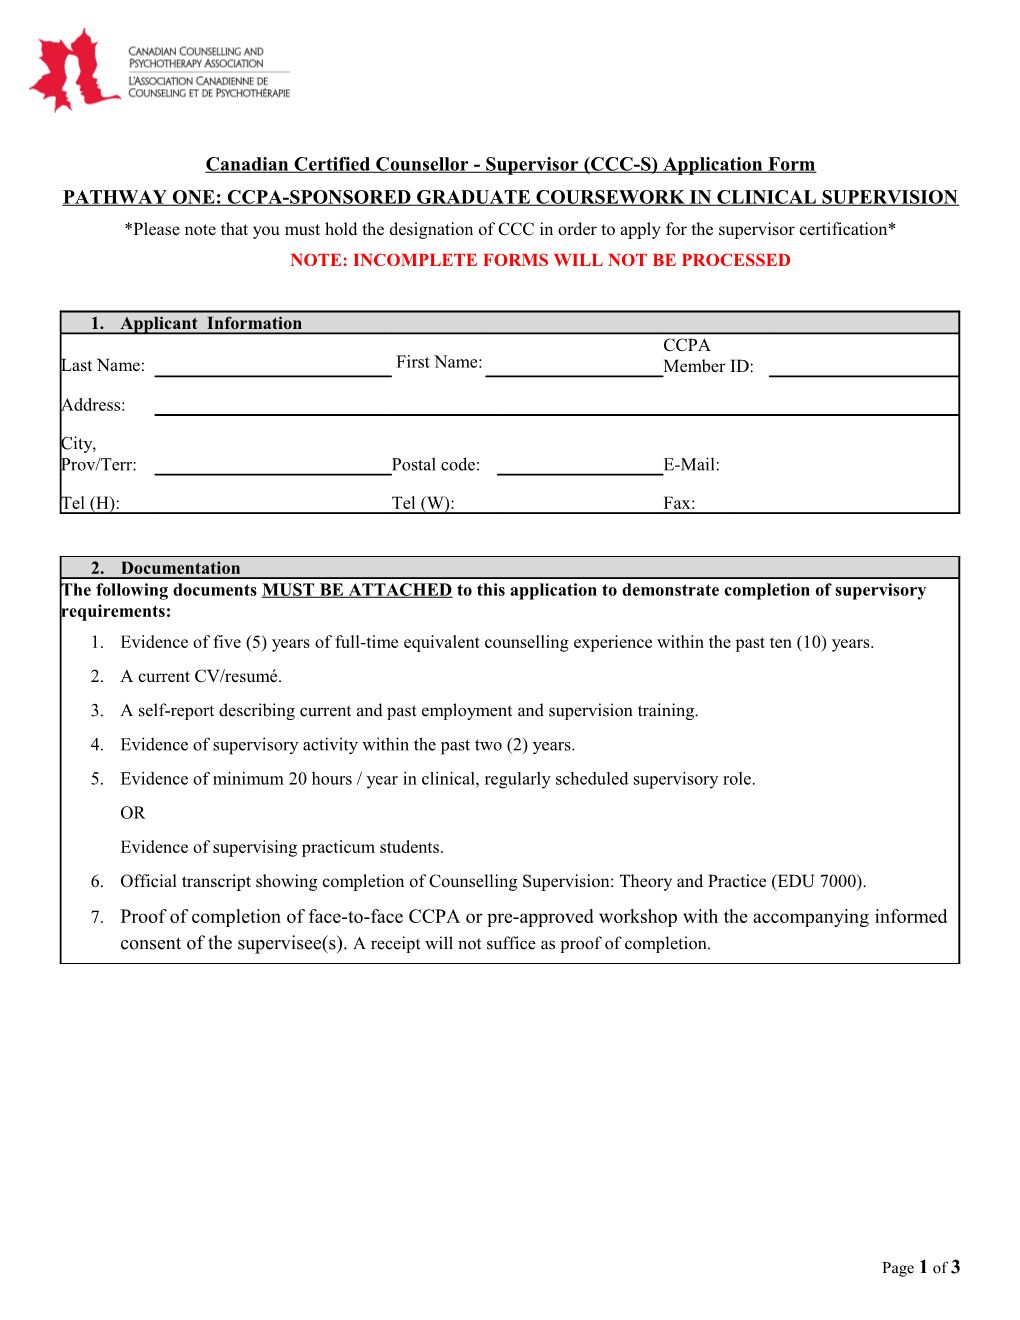 CCC Application Form